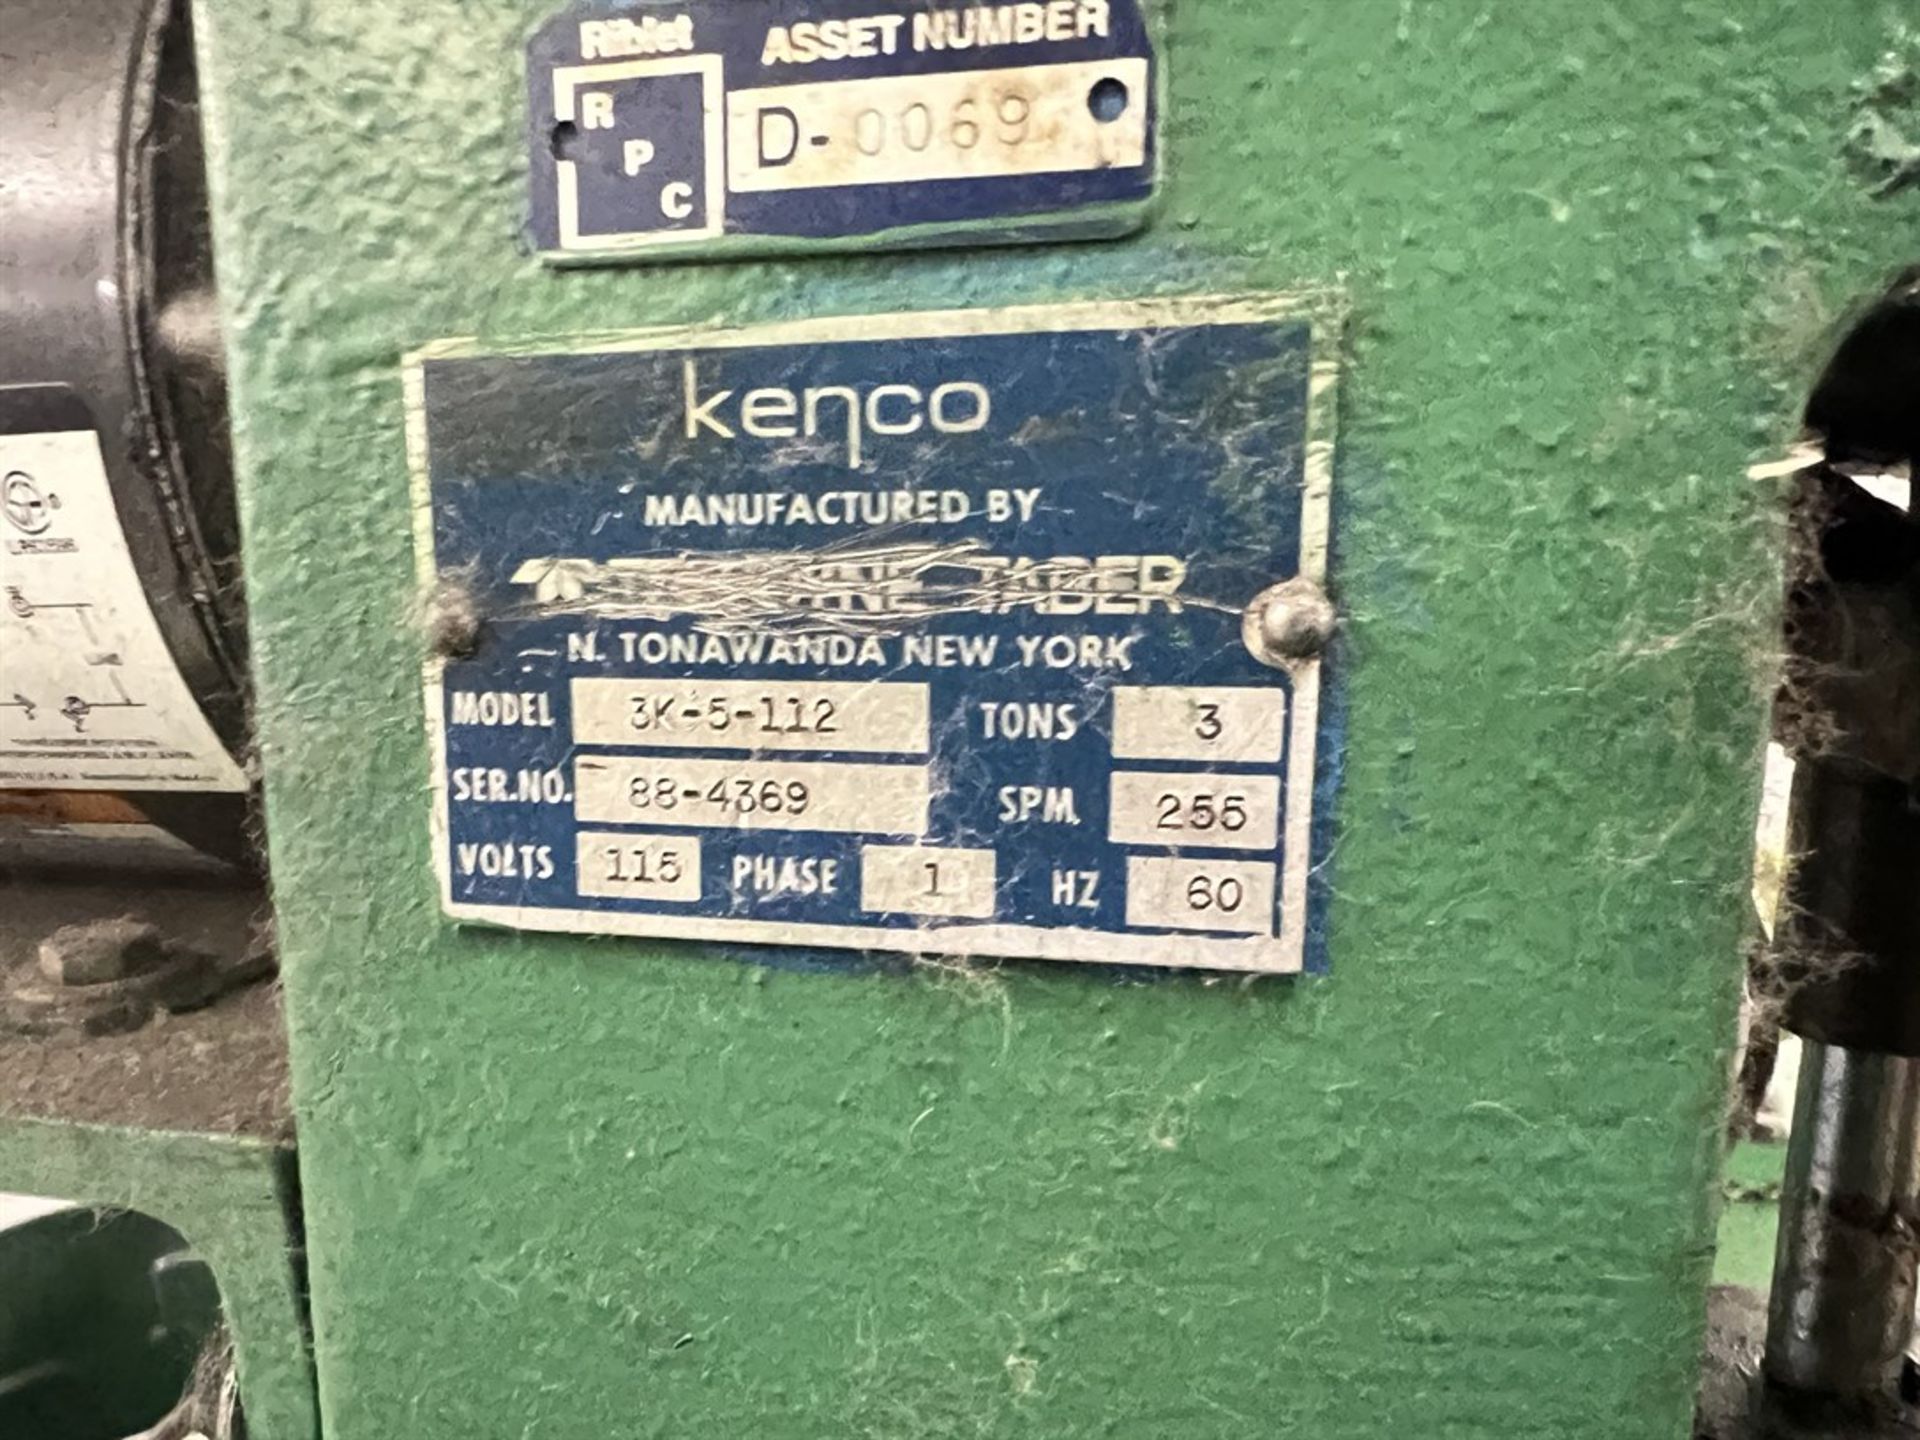 KENCO 3K-5-112 Terminal Press, s/n 88-4369 - Image 3 of 3